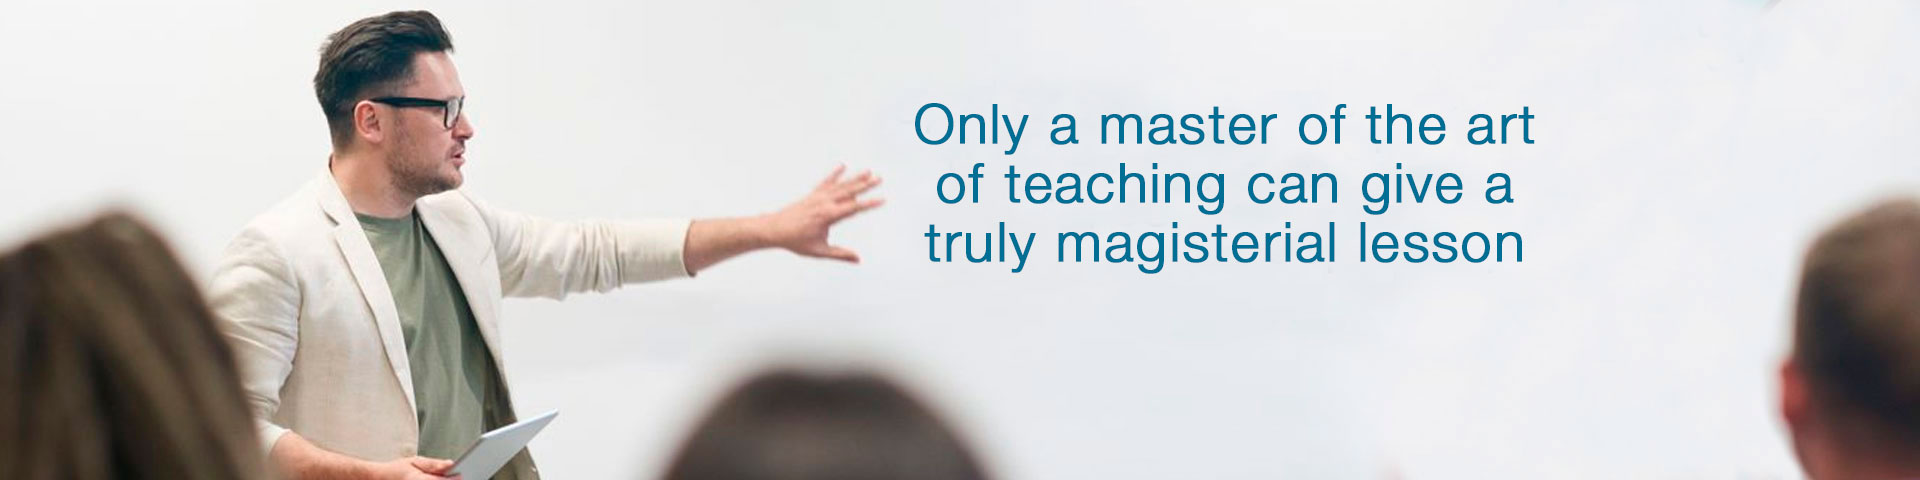 Master of the art of teaching